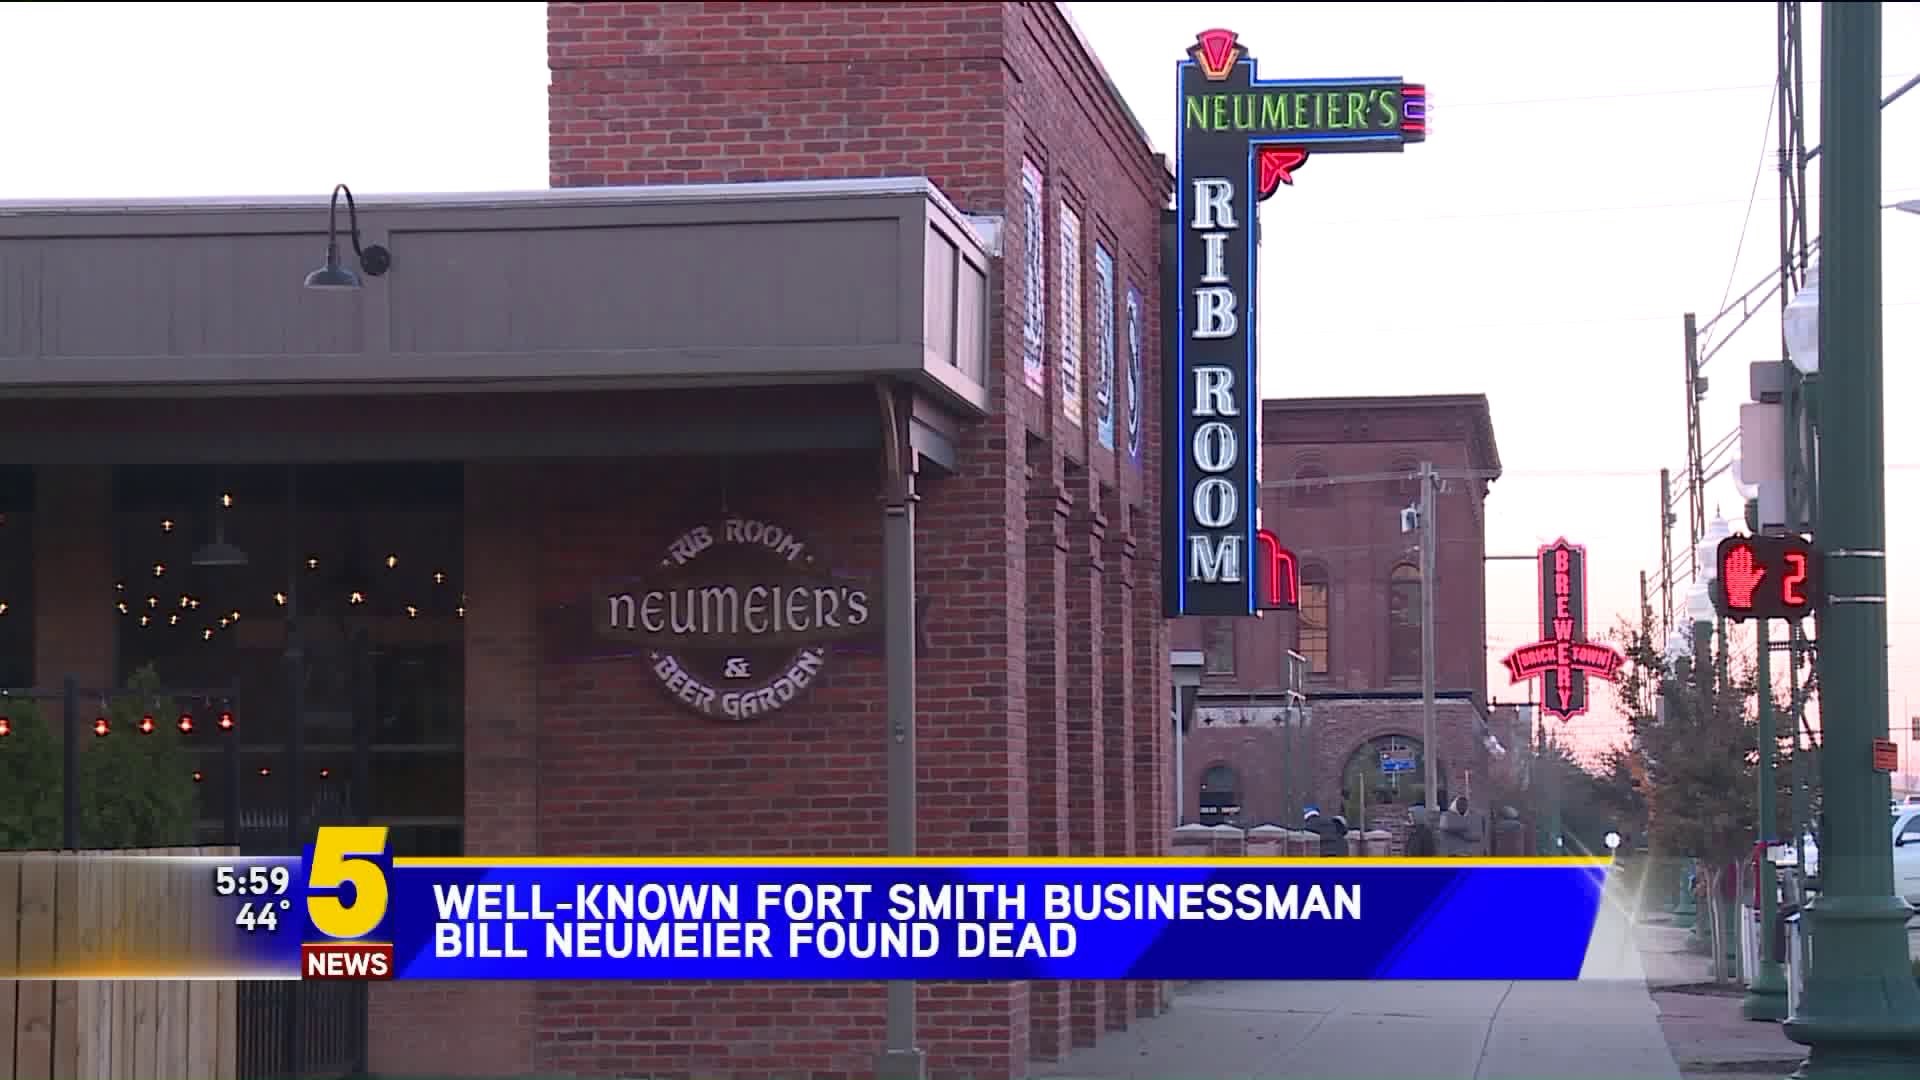 Well-Known Fort Smith Businessman Bill Neumeier Found Dead